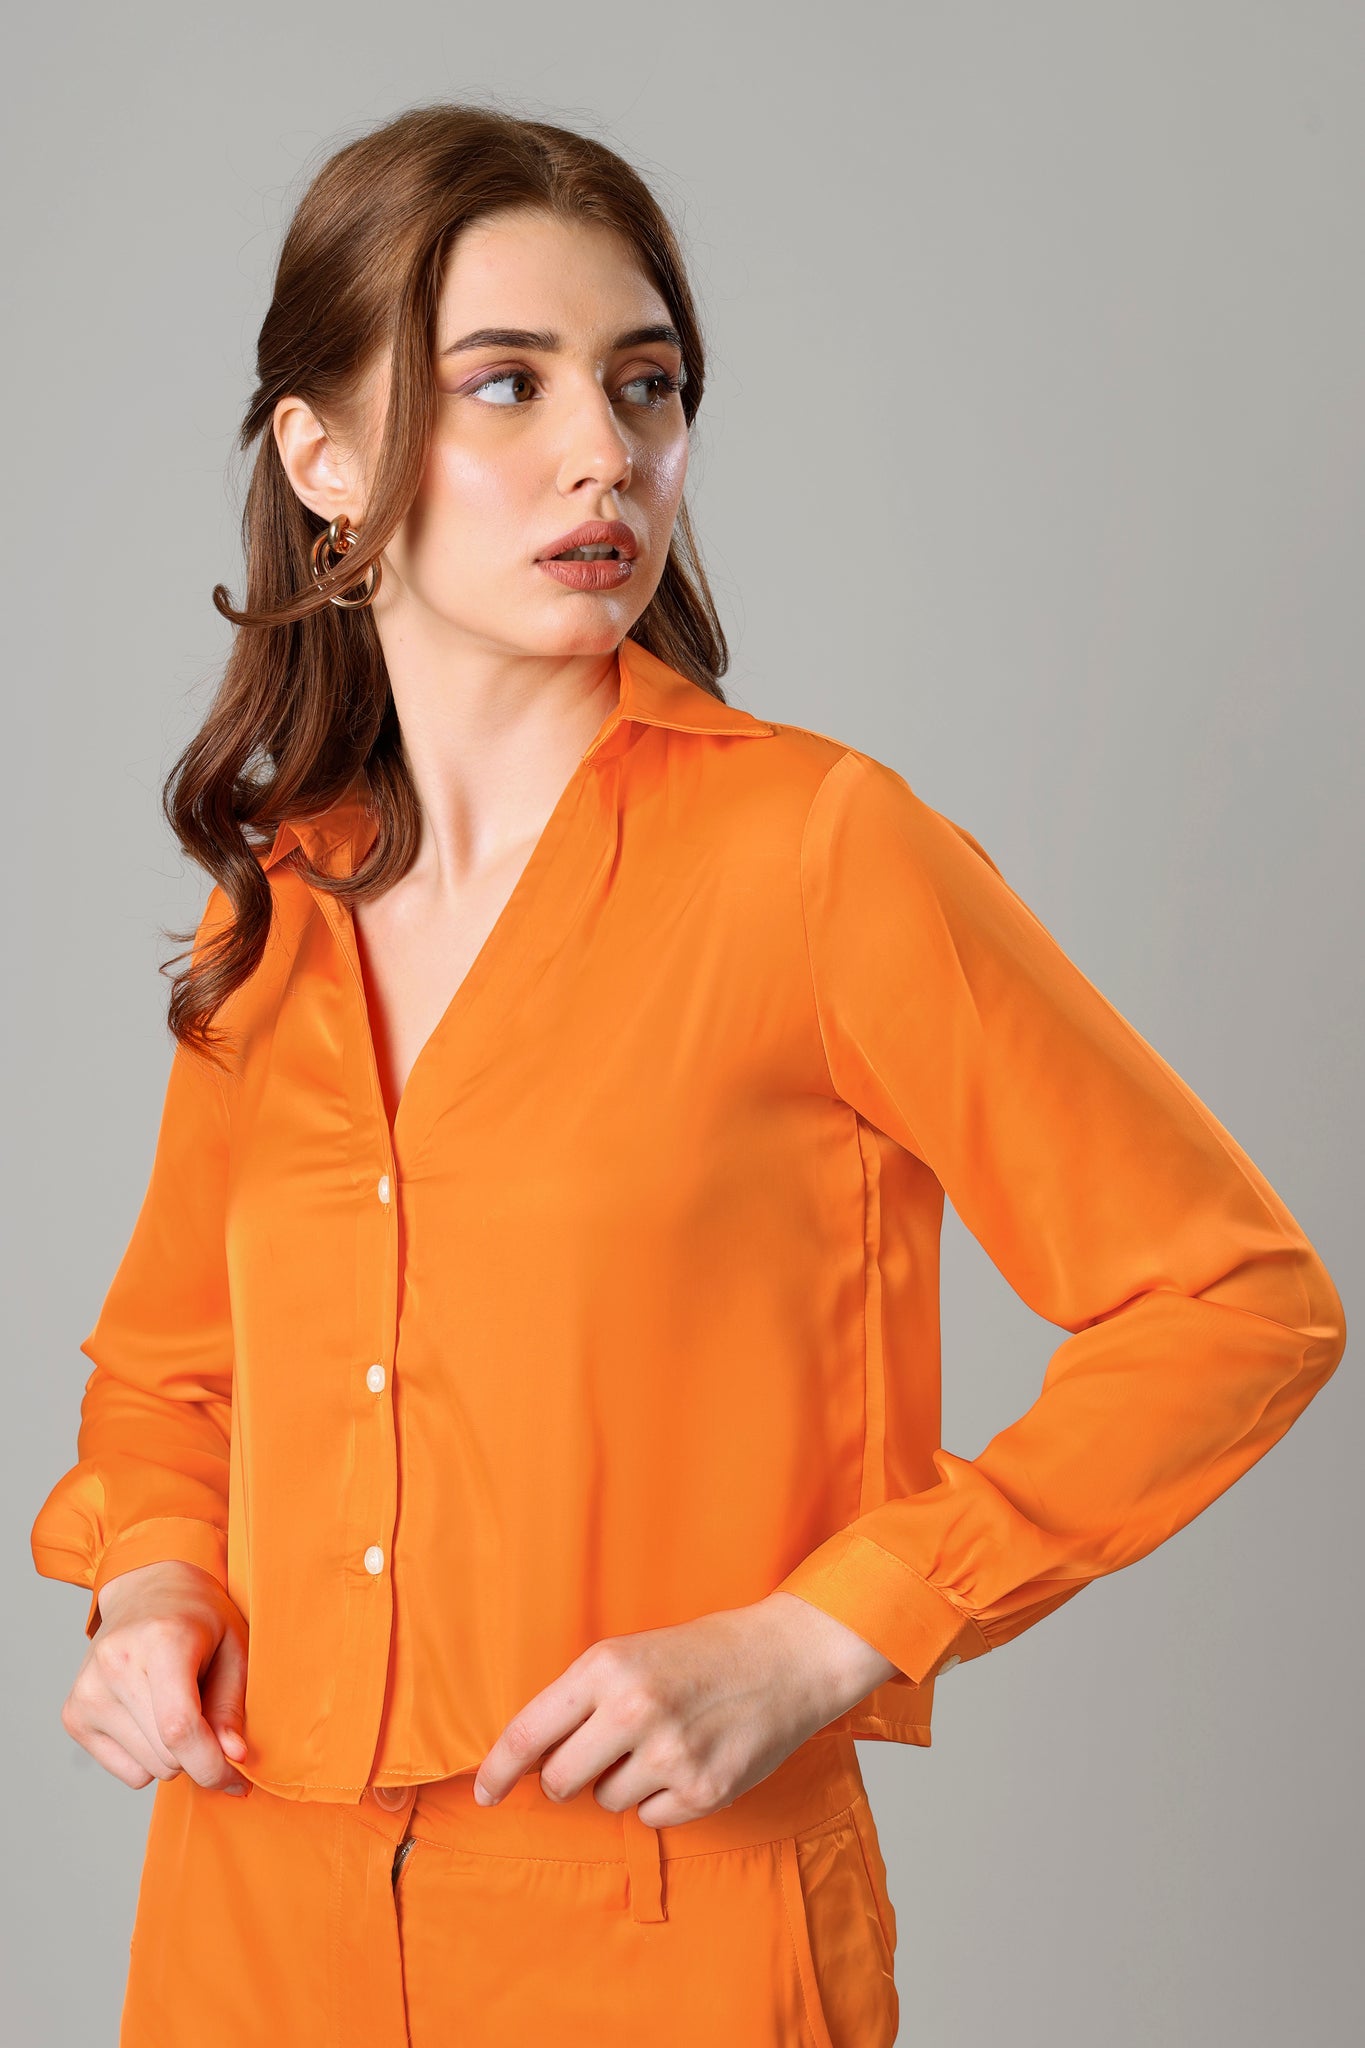 Sunset Orange Cropped Shirt For Women